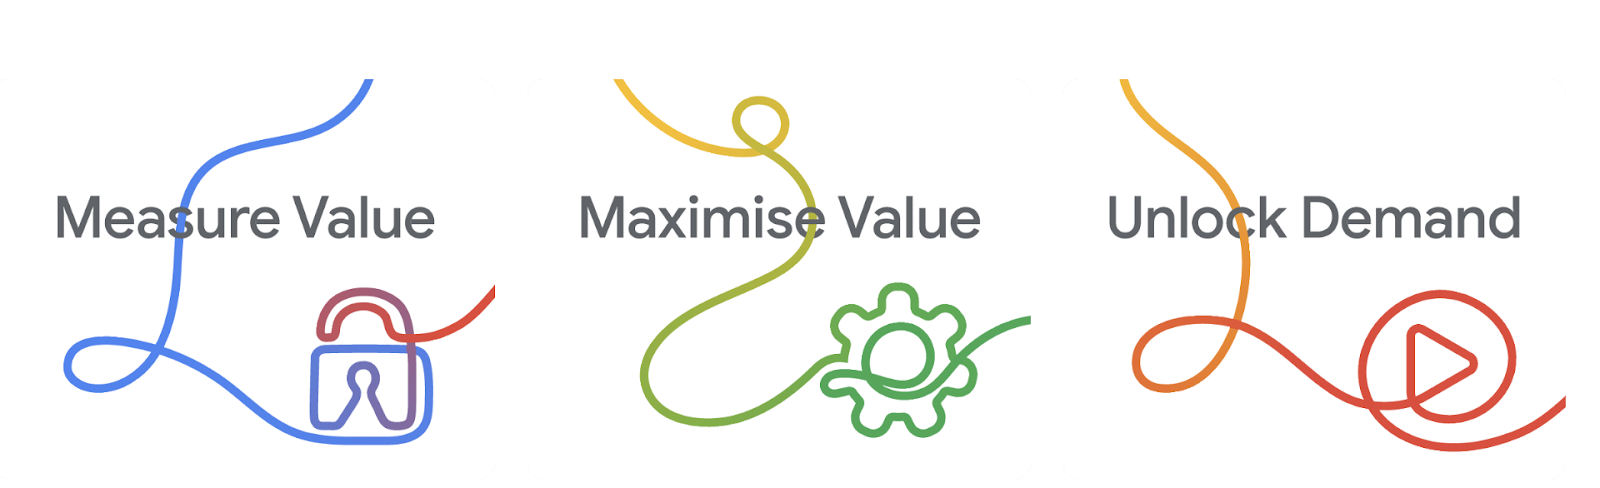 measure value, maximise value, unlock demand